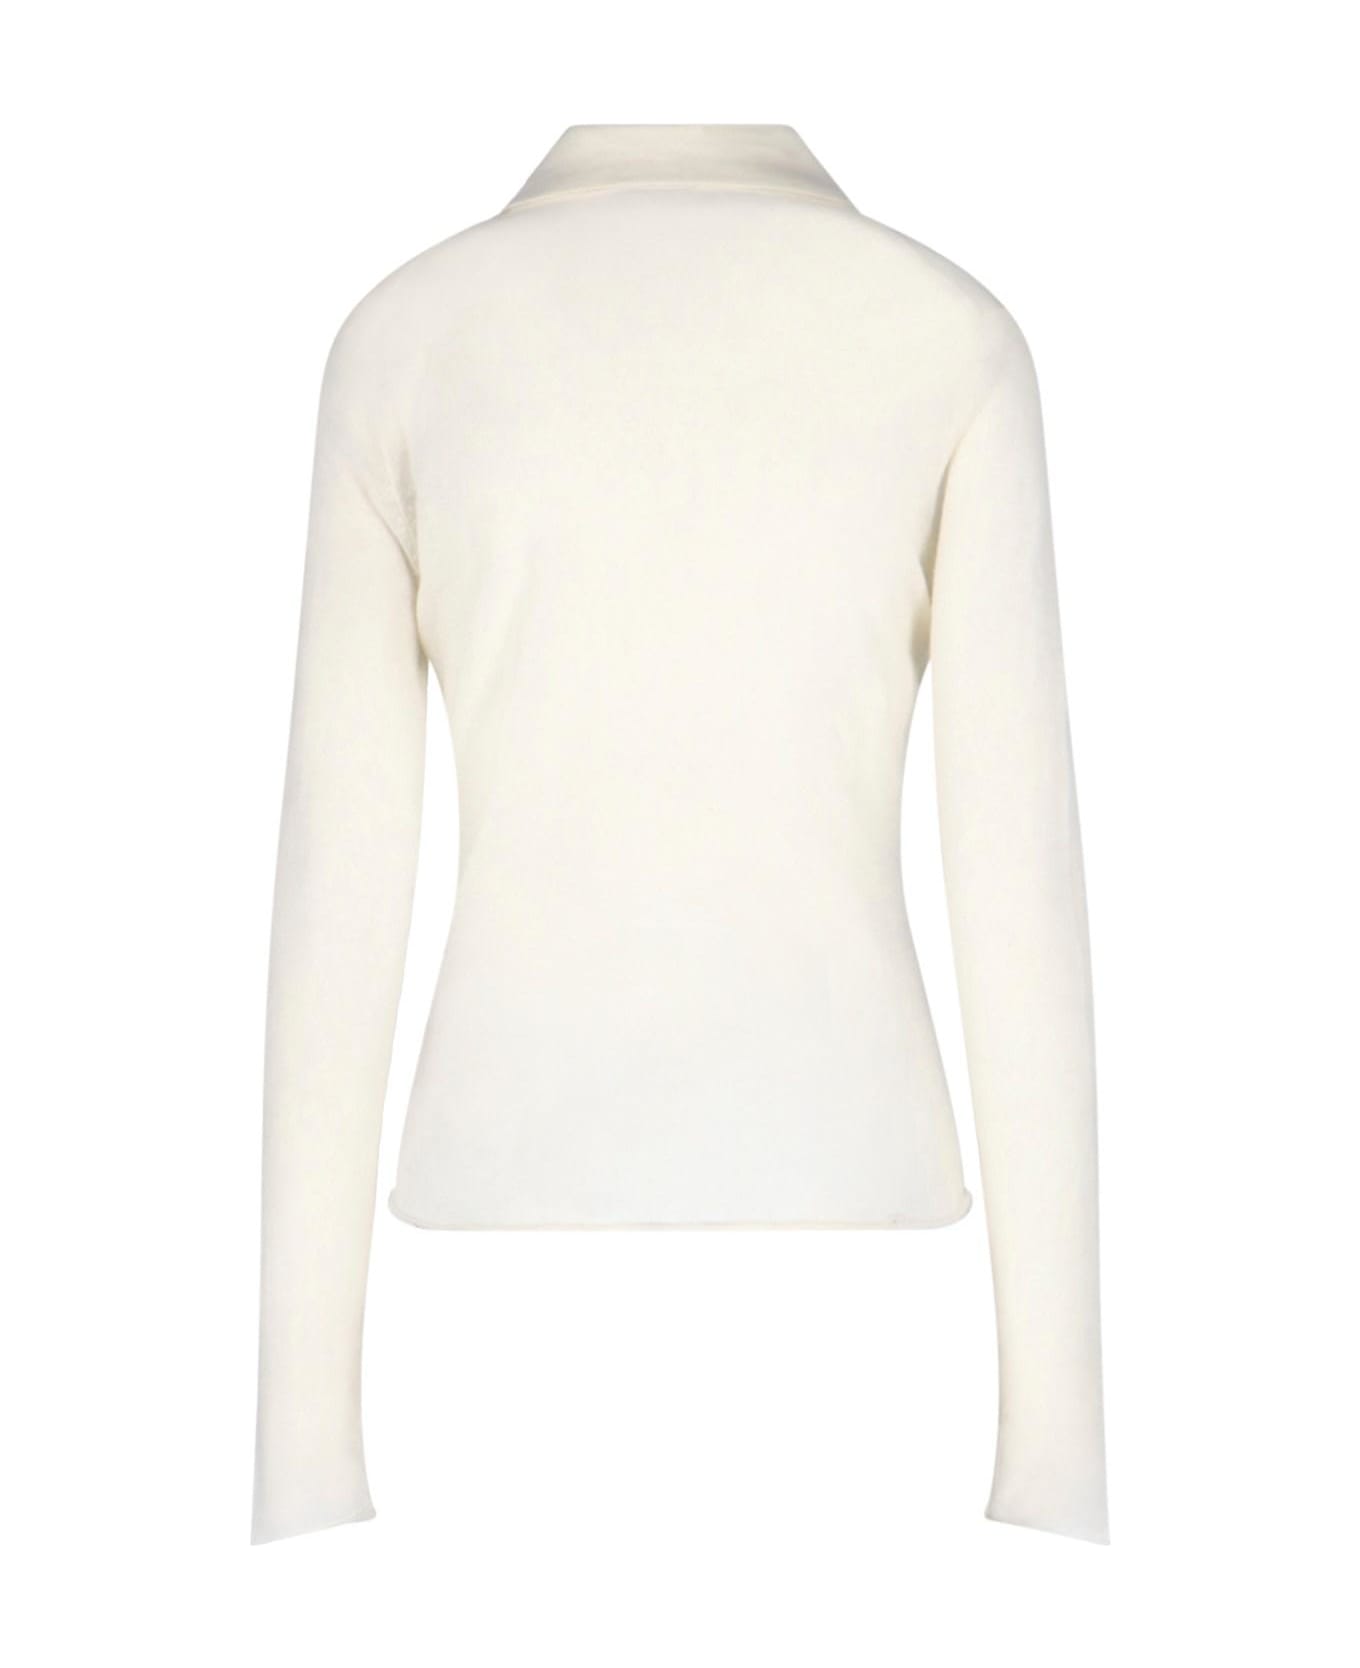 Filippa K Tight Polo Shirt - White